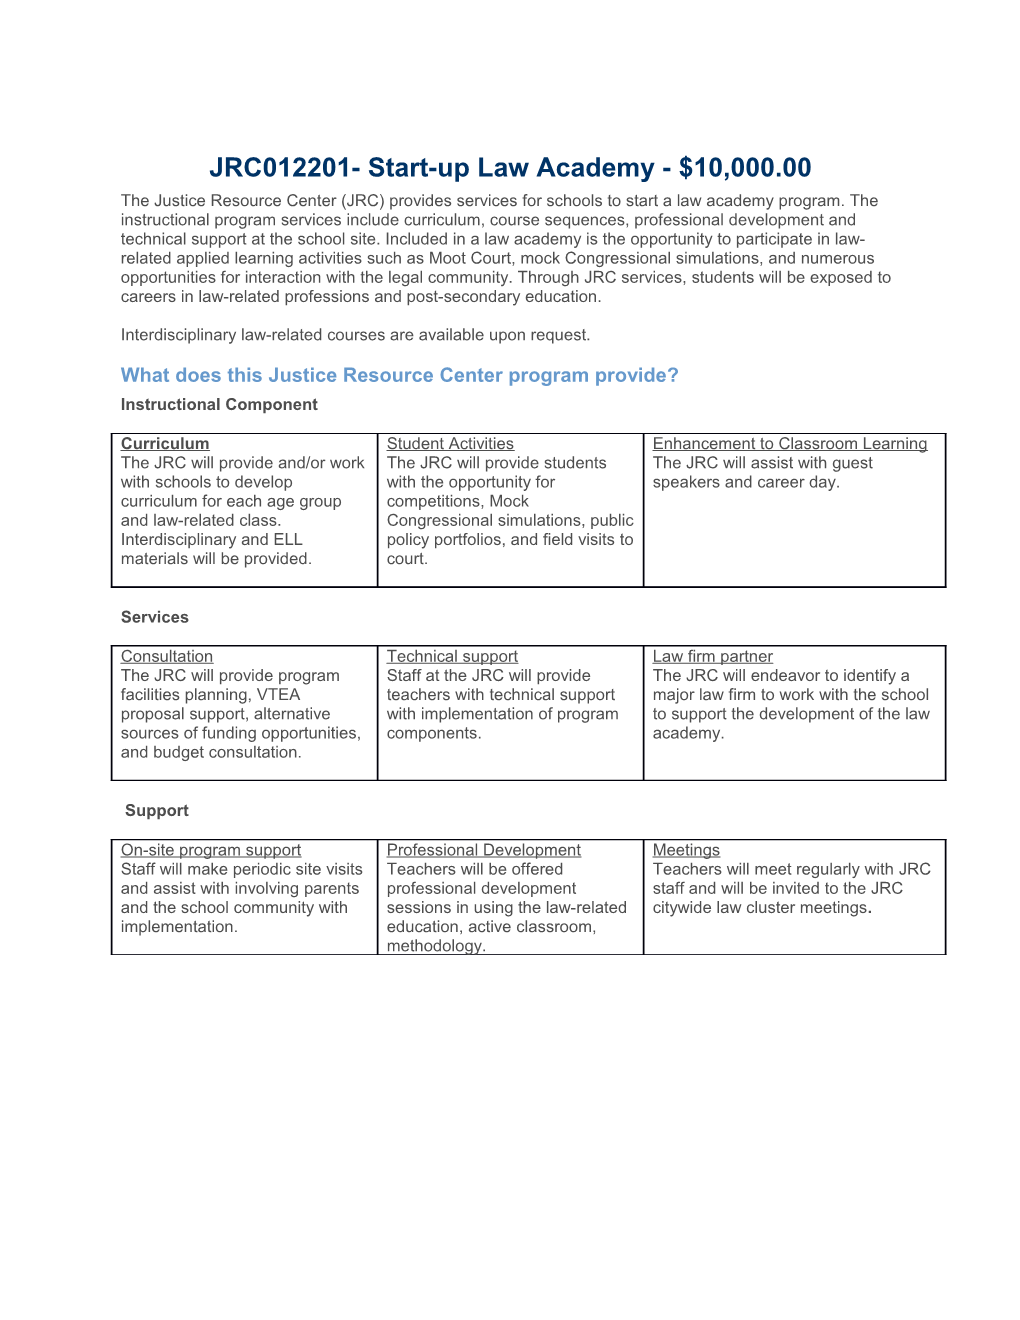 JRC012201- Start-Up Law Academy - $10,000.00